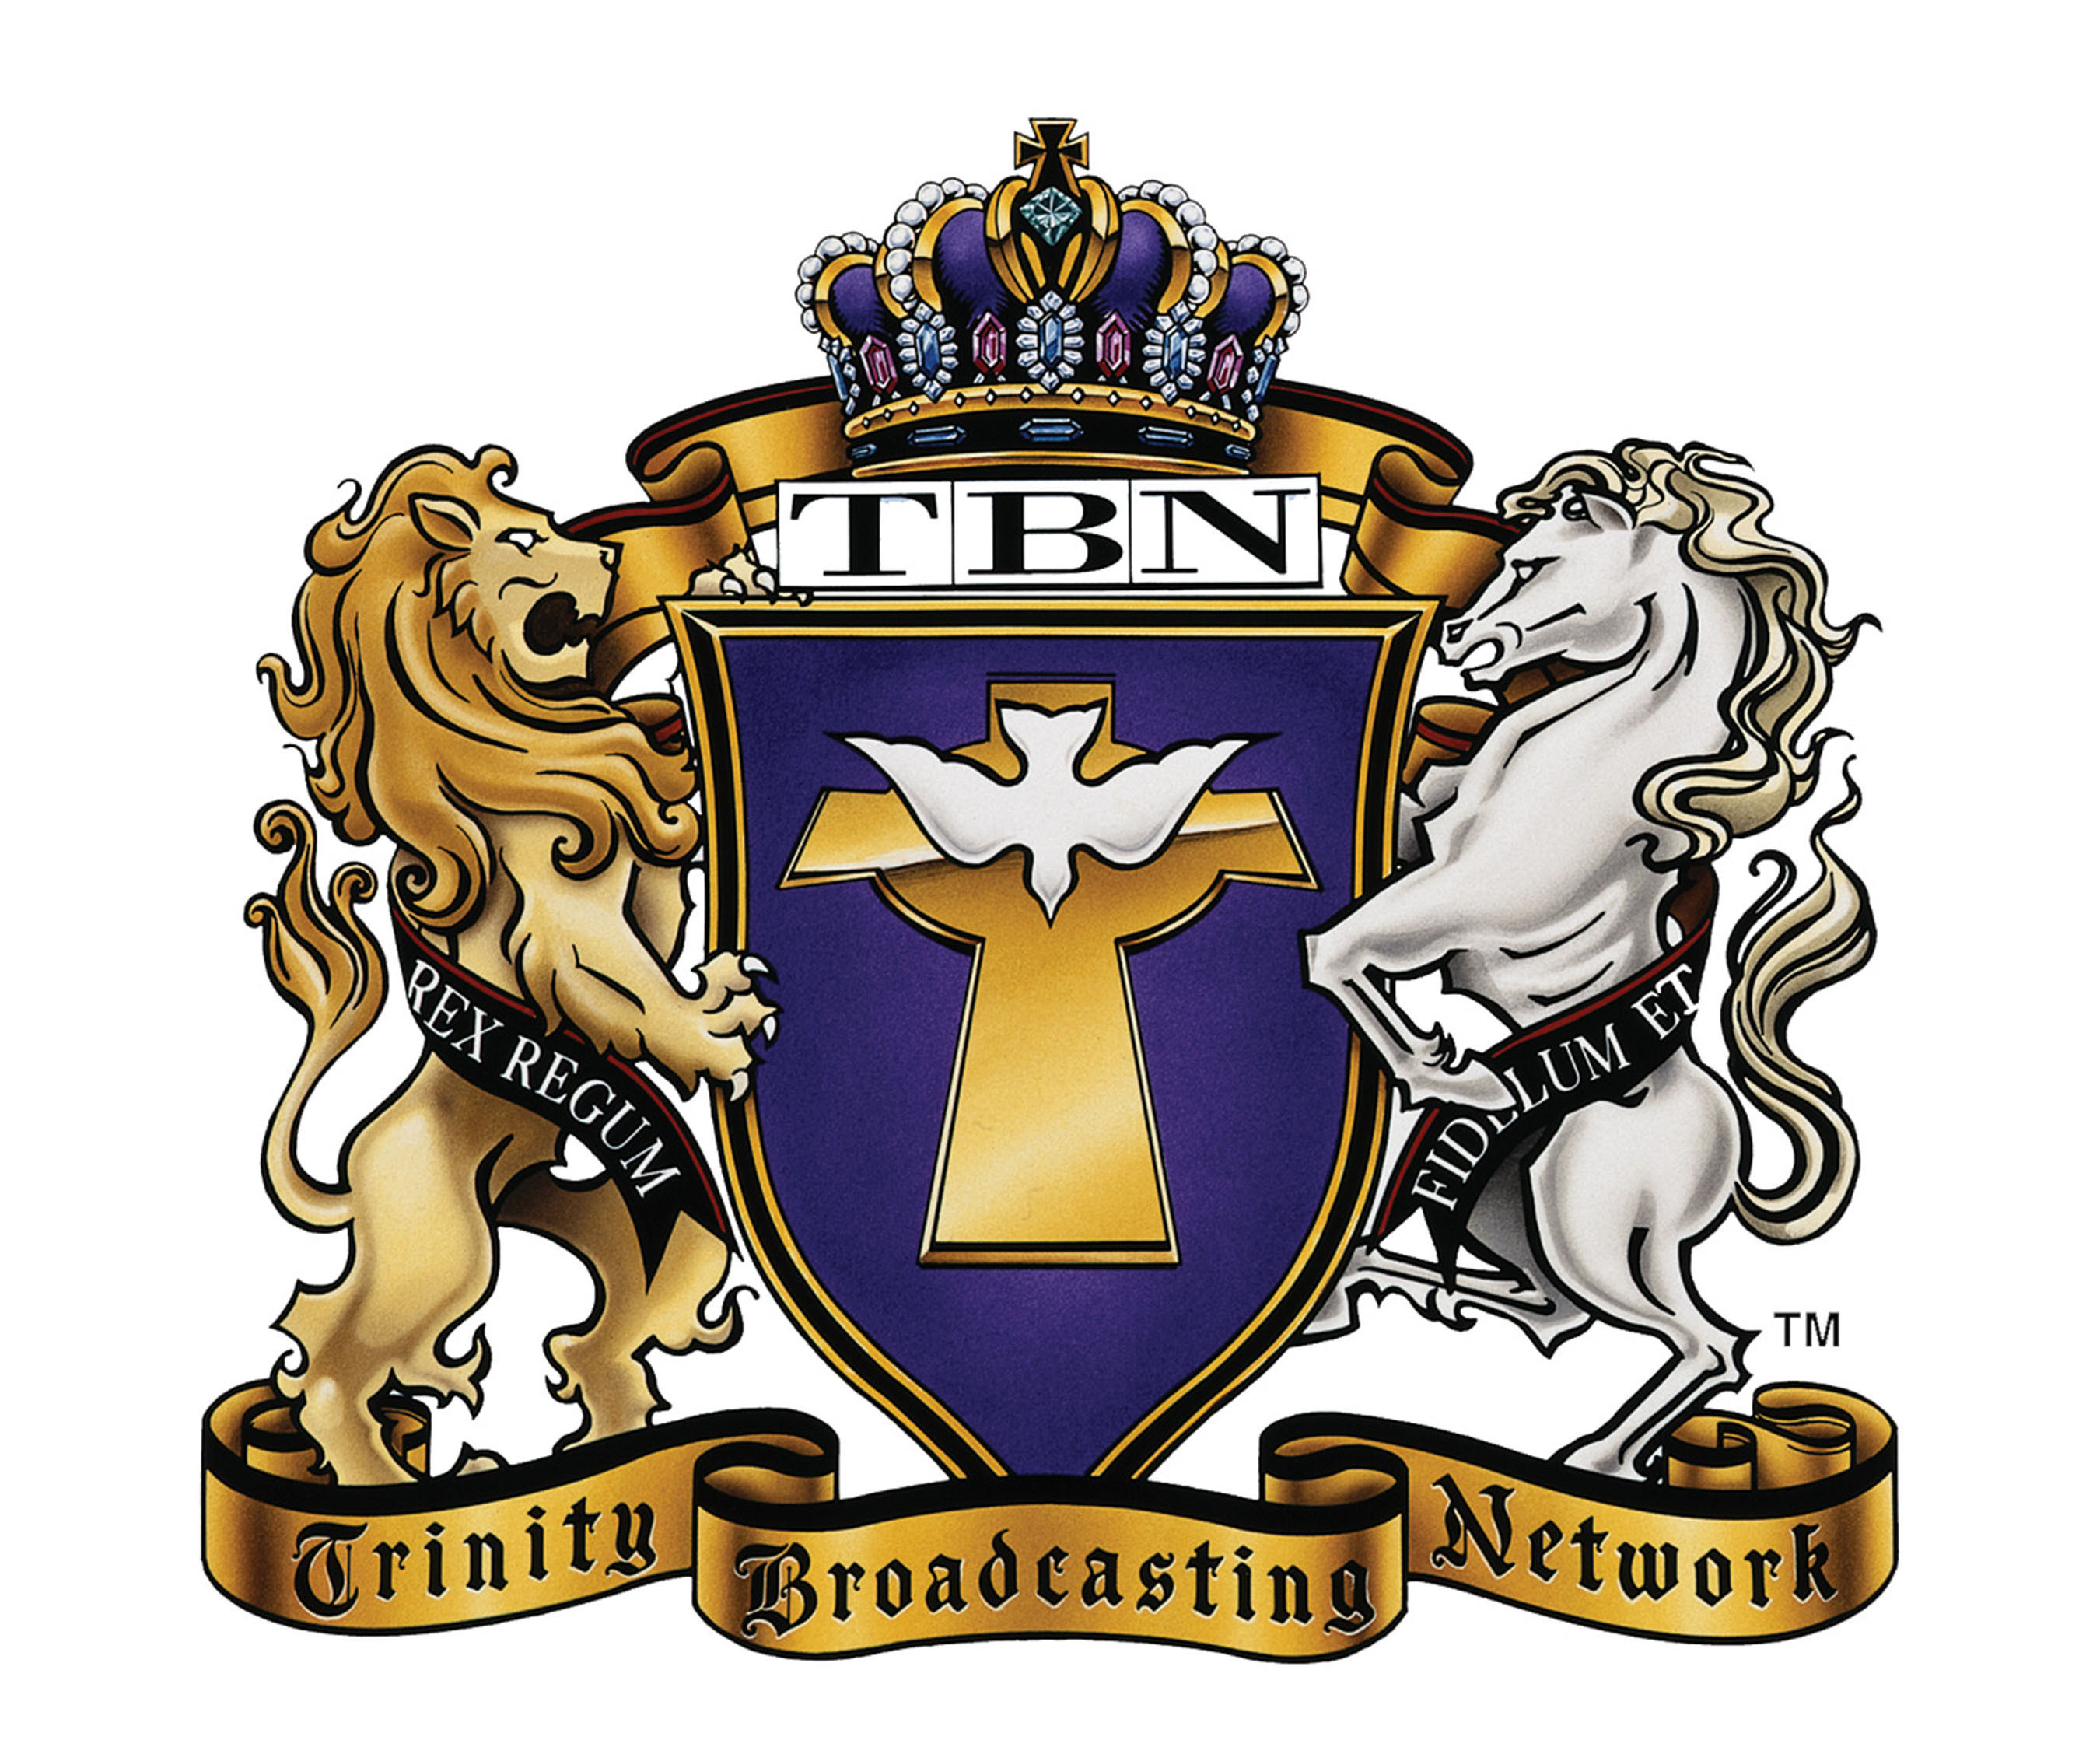 TBN Logo. (PRNewsFoto/Trinity Broadcasting Network) (PRNewsFoto/TRINITY BROADCASTING NETWORK)